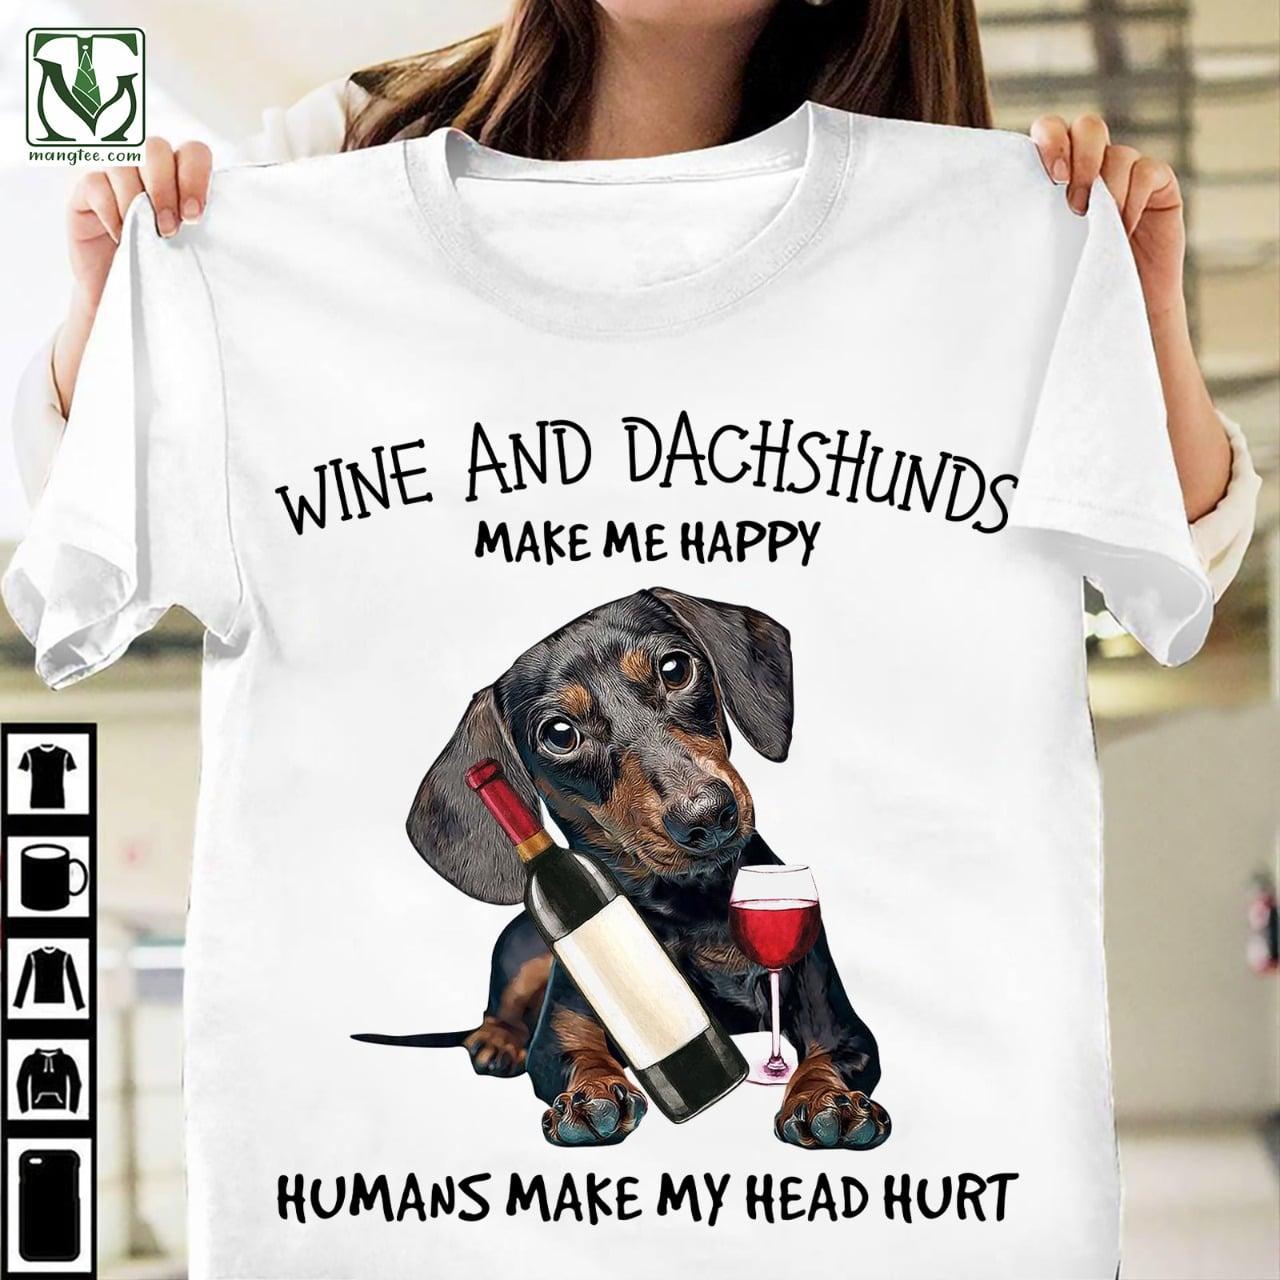 Wine and Dachshunds make me happy, humans make my head hurt - Wine and dog lover